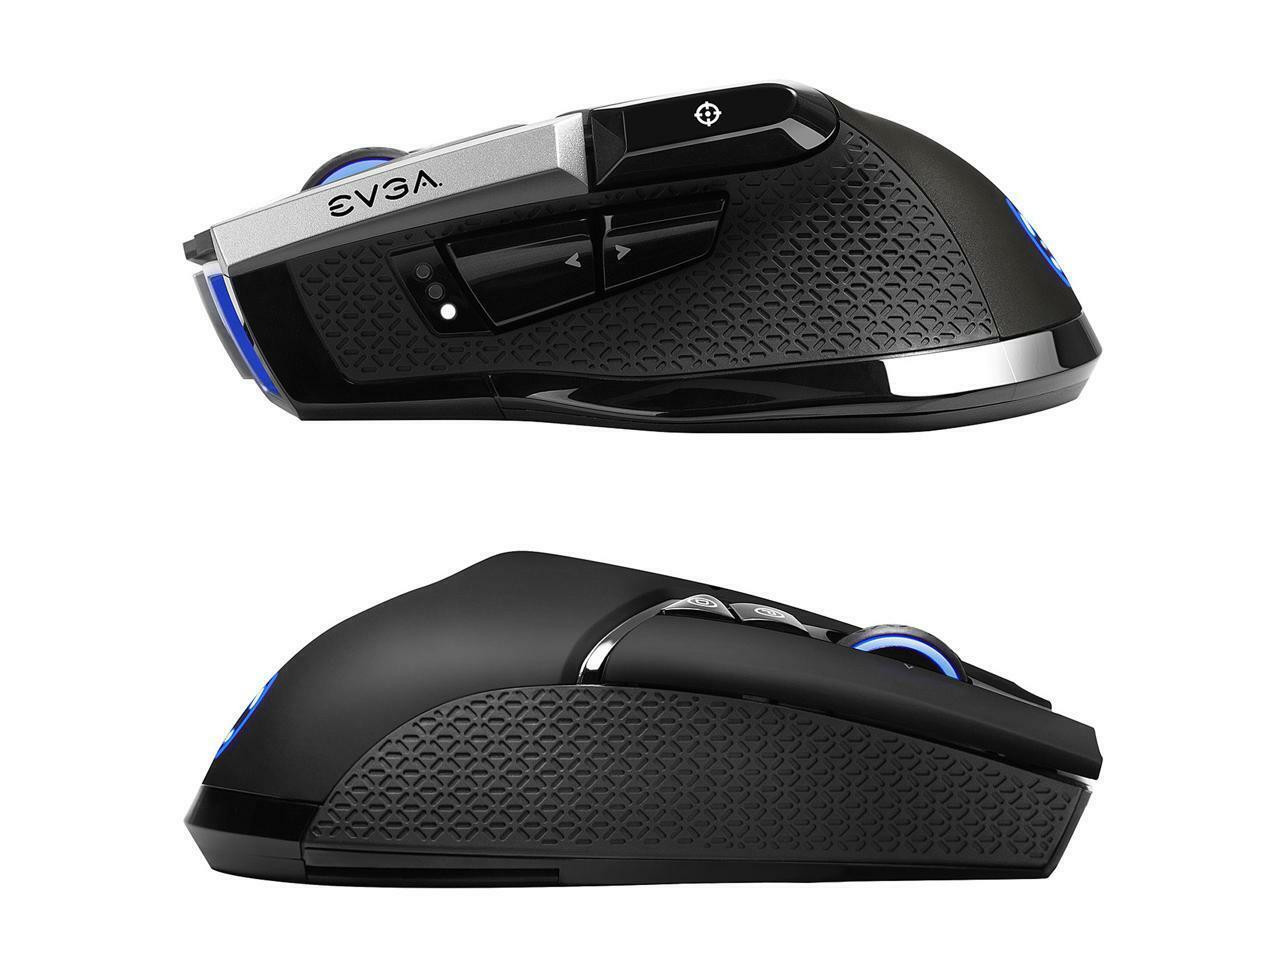 computadoras y laptops - EVGA X20 Gaming Mouse Wireless 4